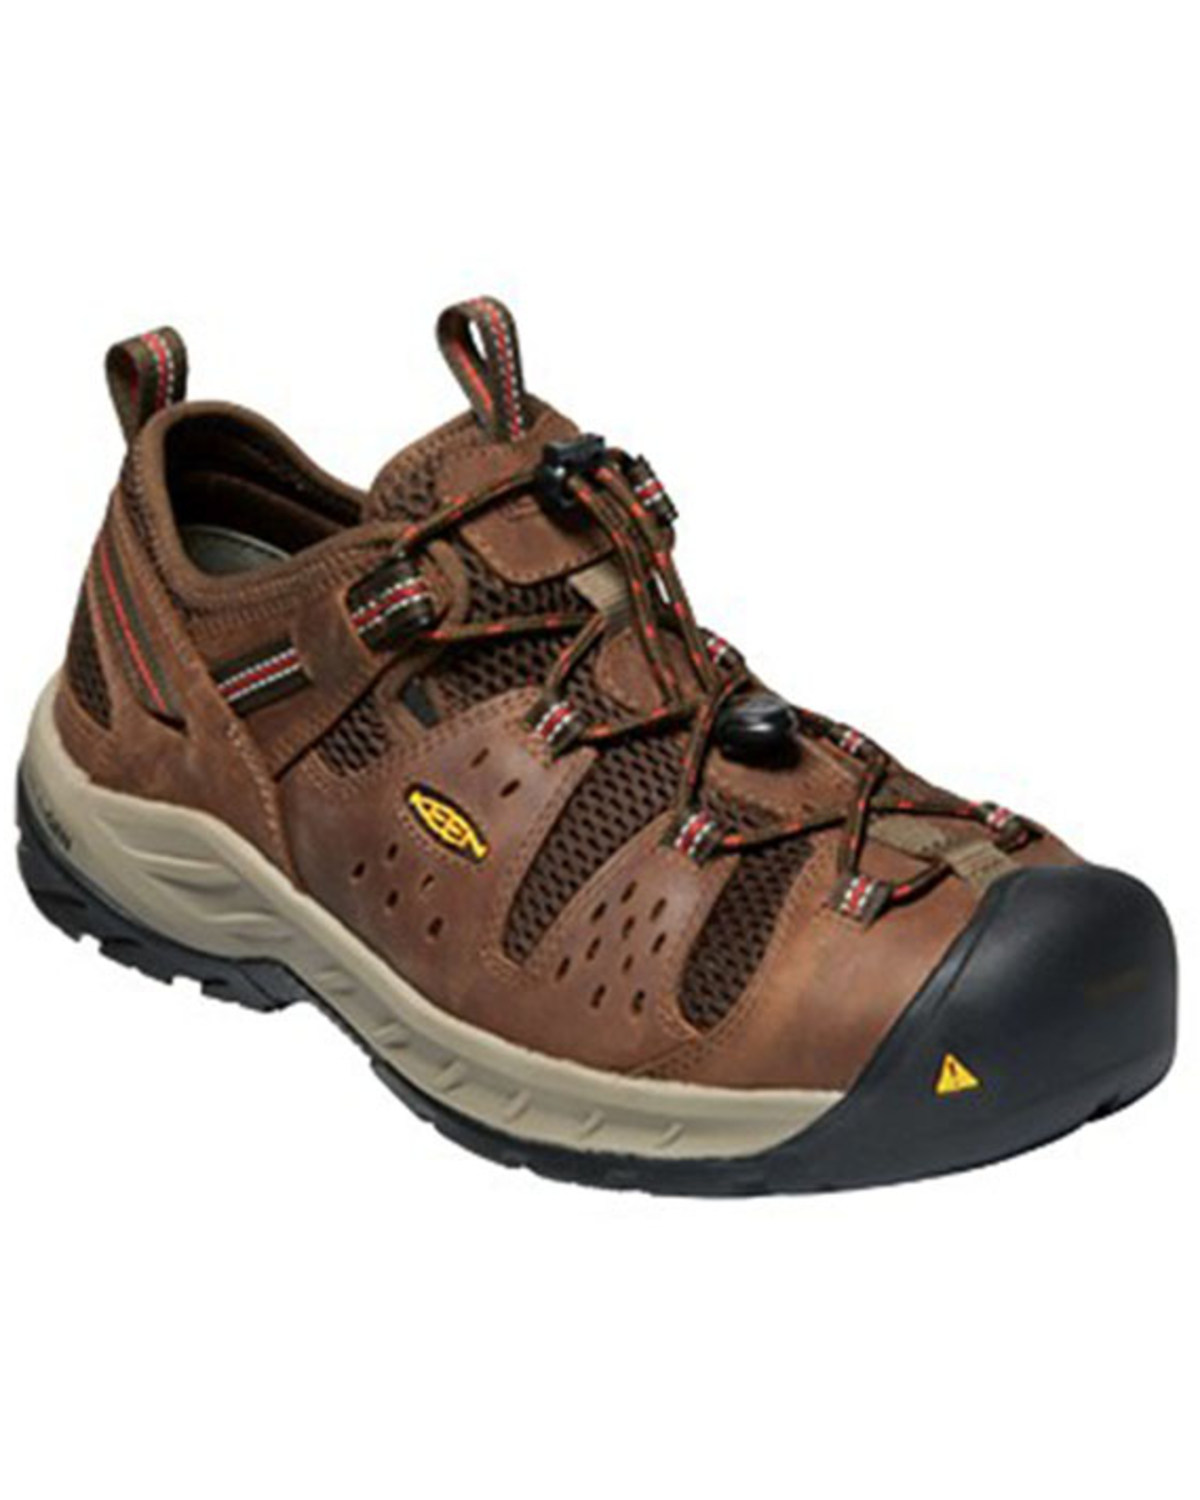 Keen Men's Atlanta Cool II Hiking Shoes - Steel Toe